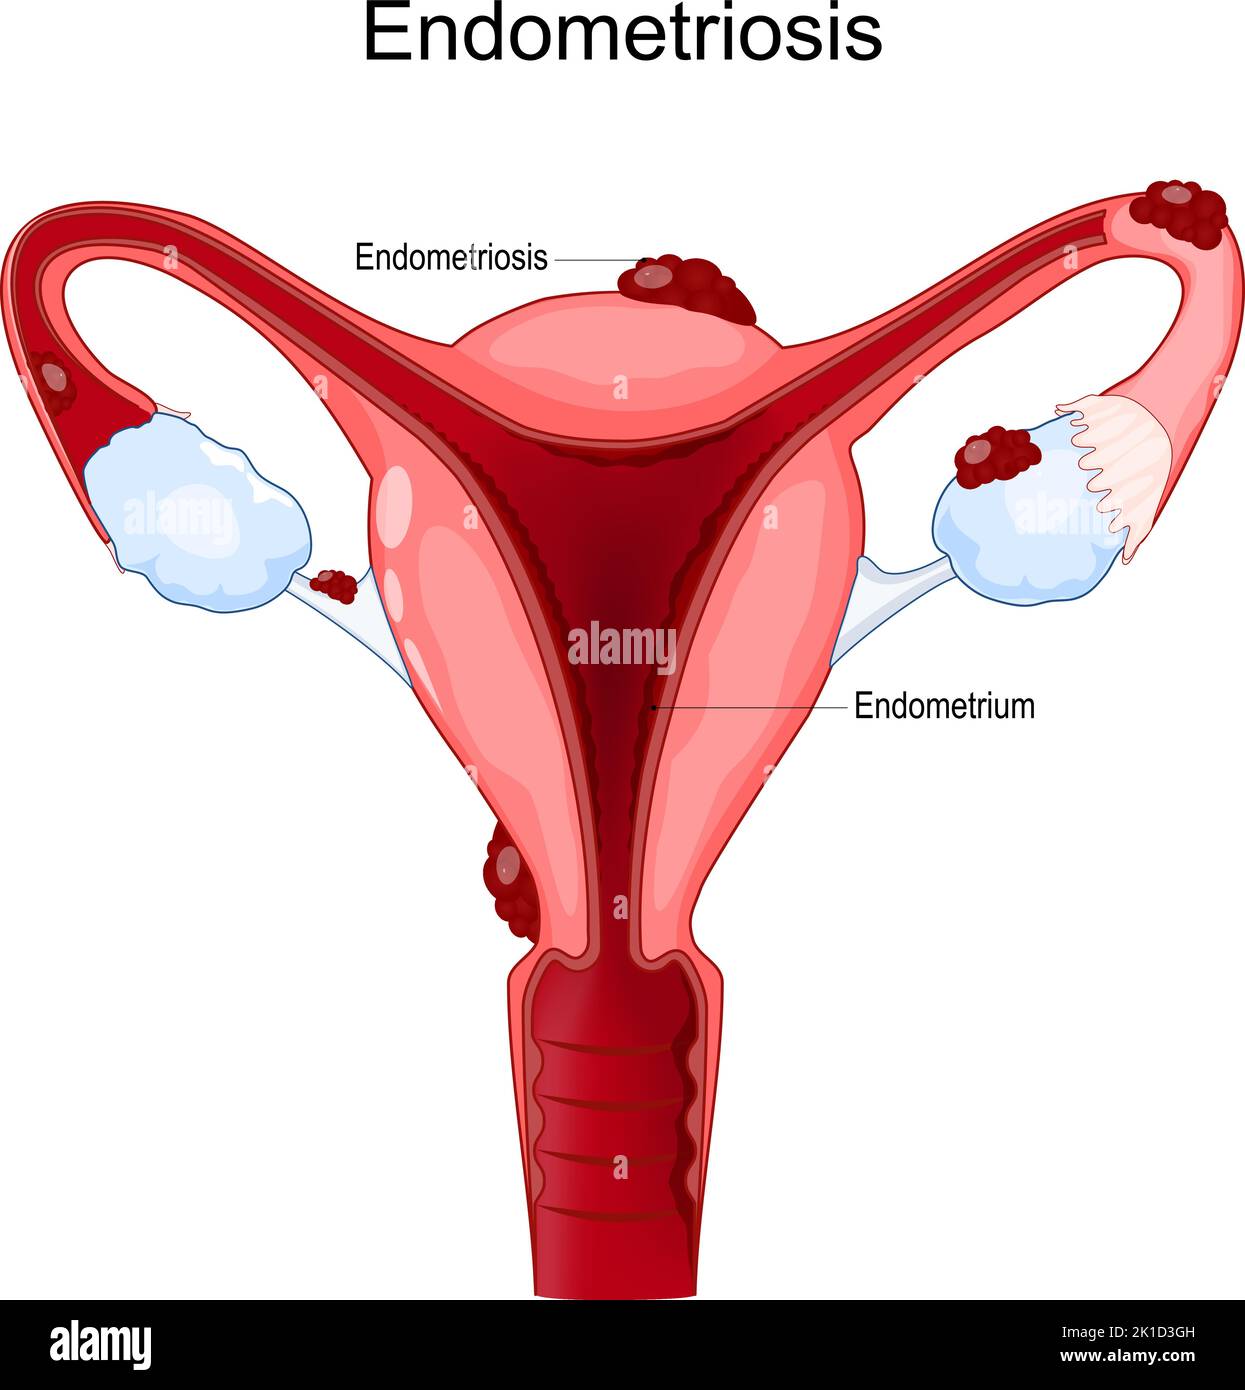 Endometriosis. Female reproductive system. Human uterus with cells endometrium that grow outside the uterus. female diseases. vector poster Stock Vector